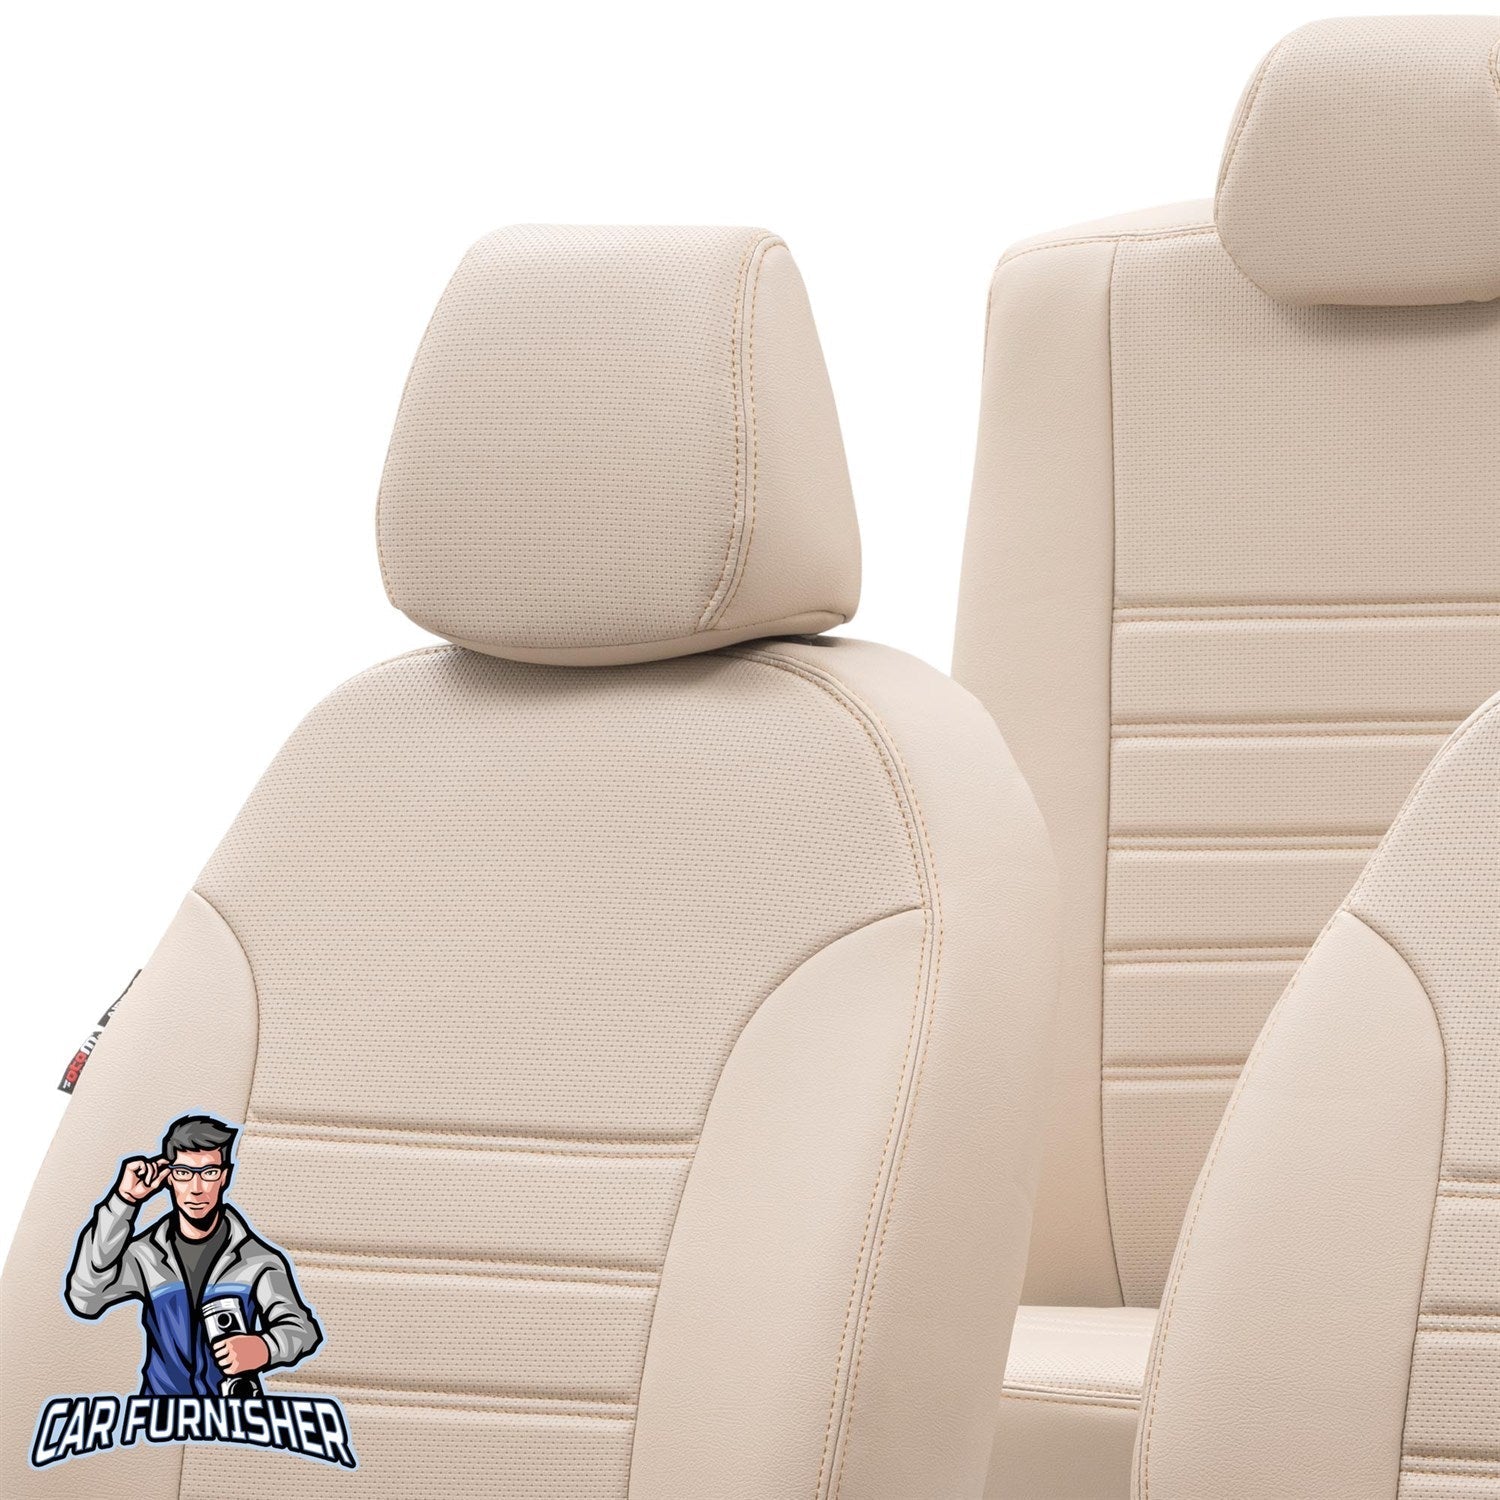 Fiat Linea Car Seat Covers 2007-2017 New York Design Beige Full Set (5 Seats + Handrest) Leather & Fabric